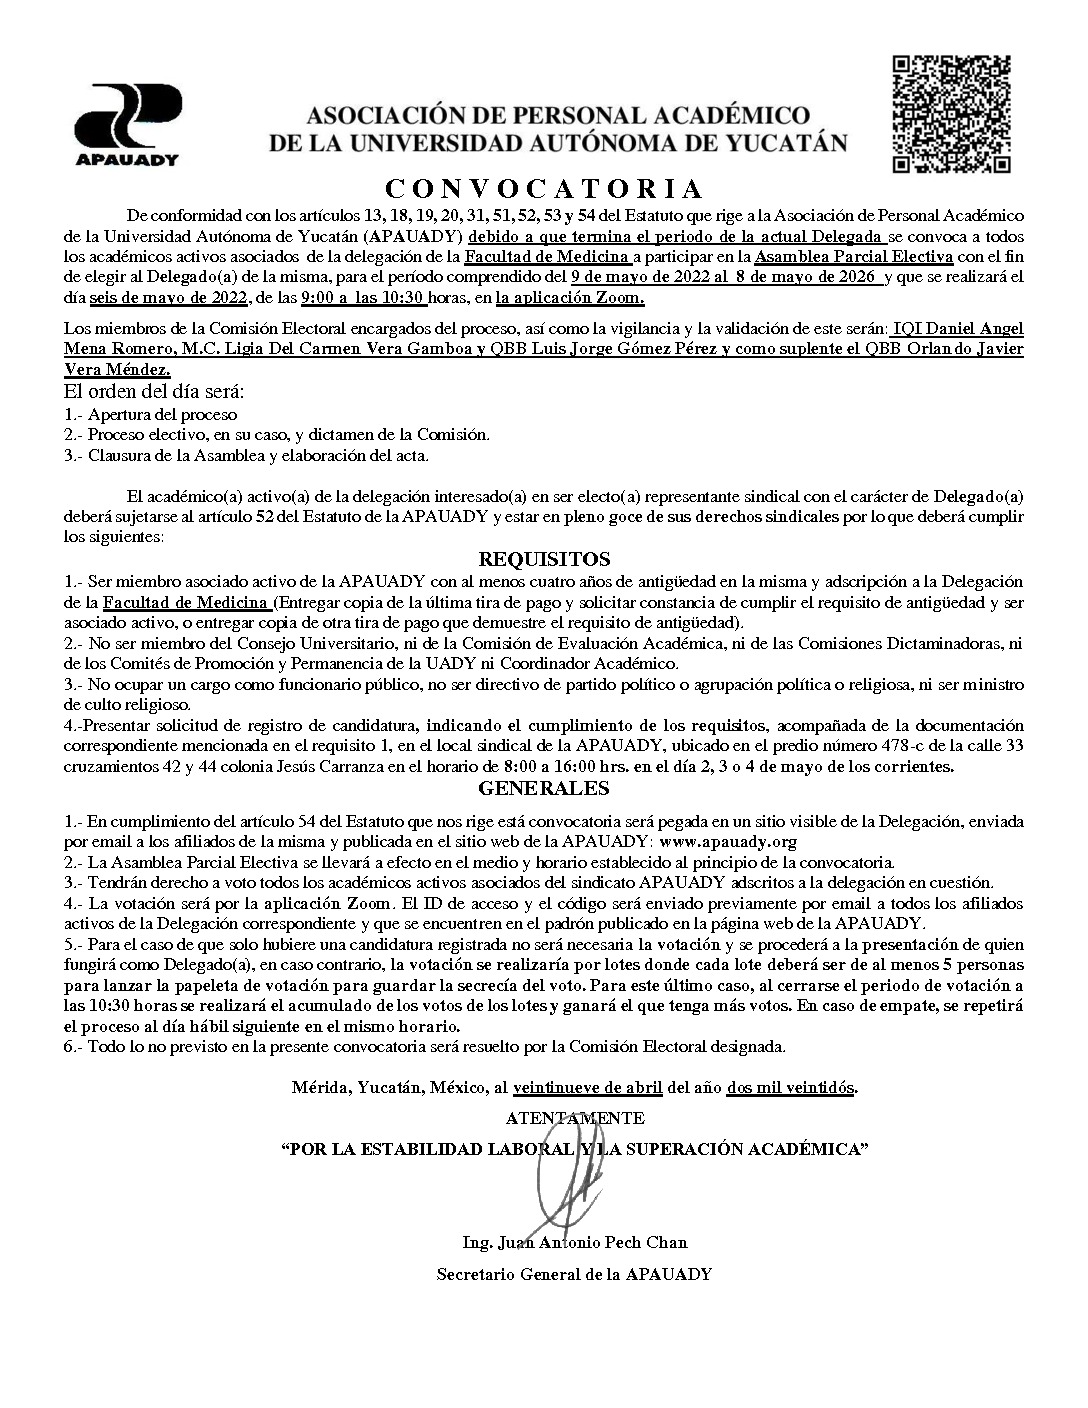 Featured image for “Convocatoria Asamblea Parcial Electiva | Facultad de Médicina | 6 mayo 2022 | 9:00-10:30”